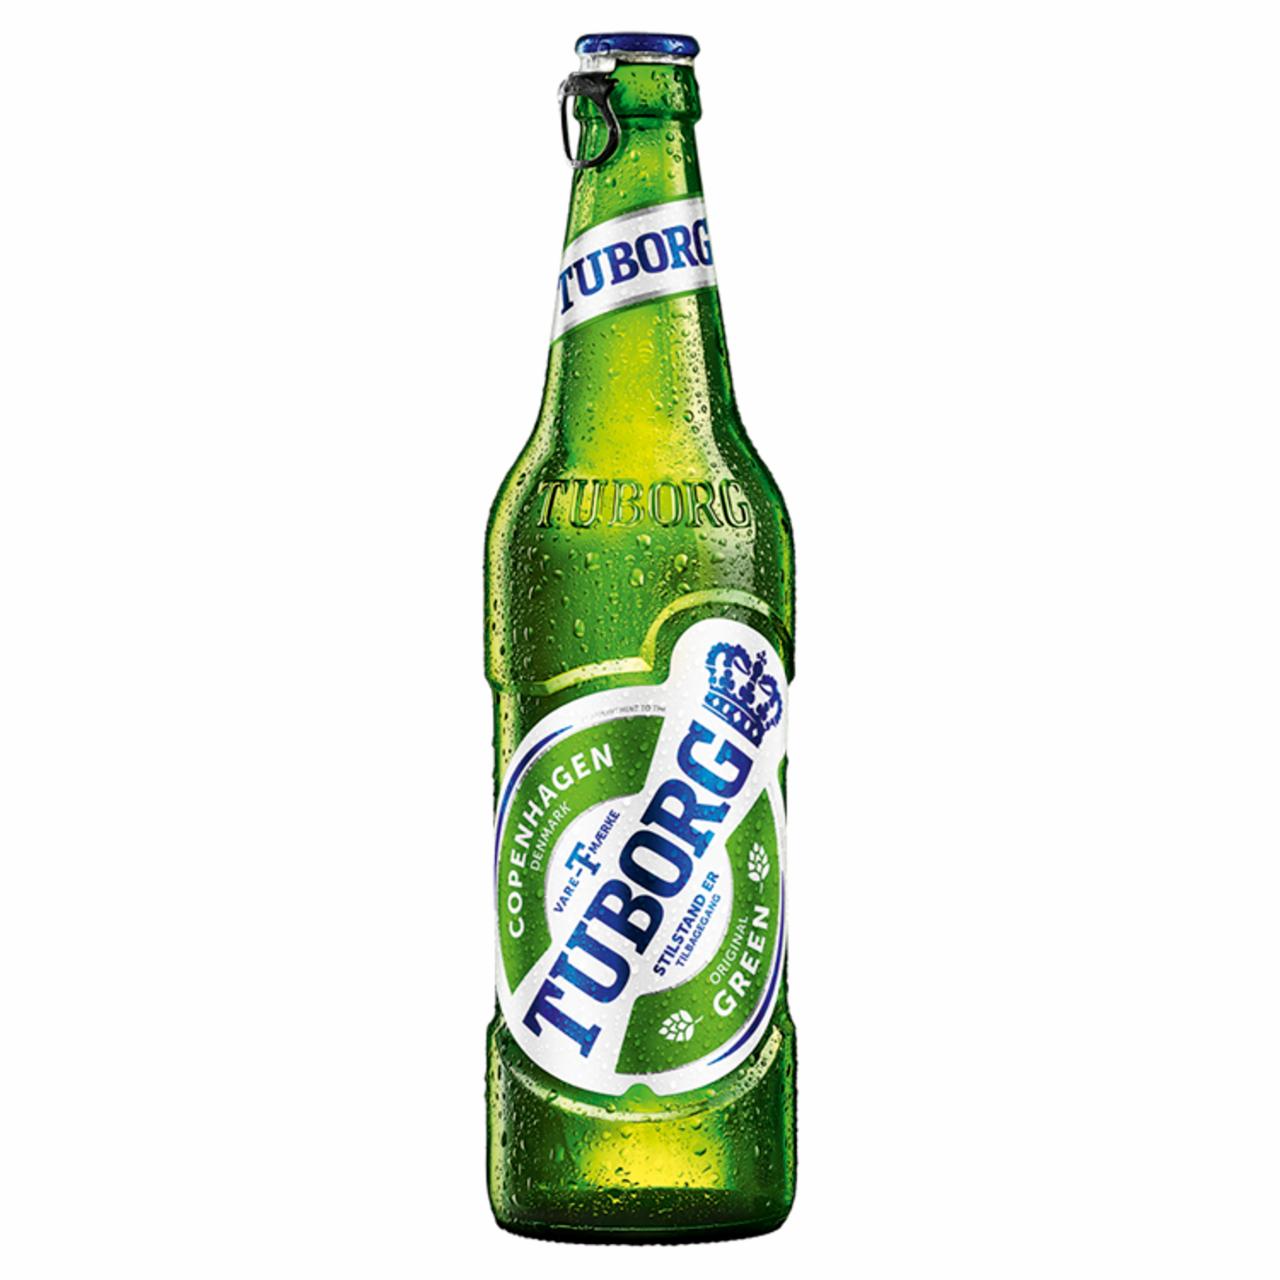 Képek - Tuborg világos sör 4,6% 0,33 l